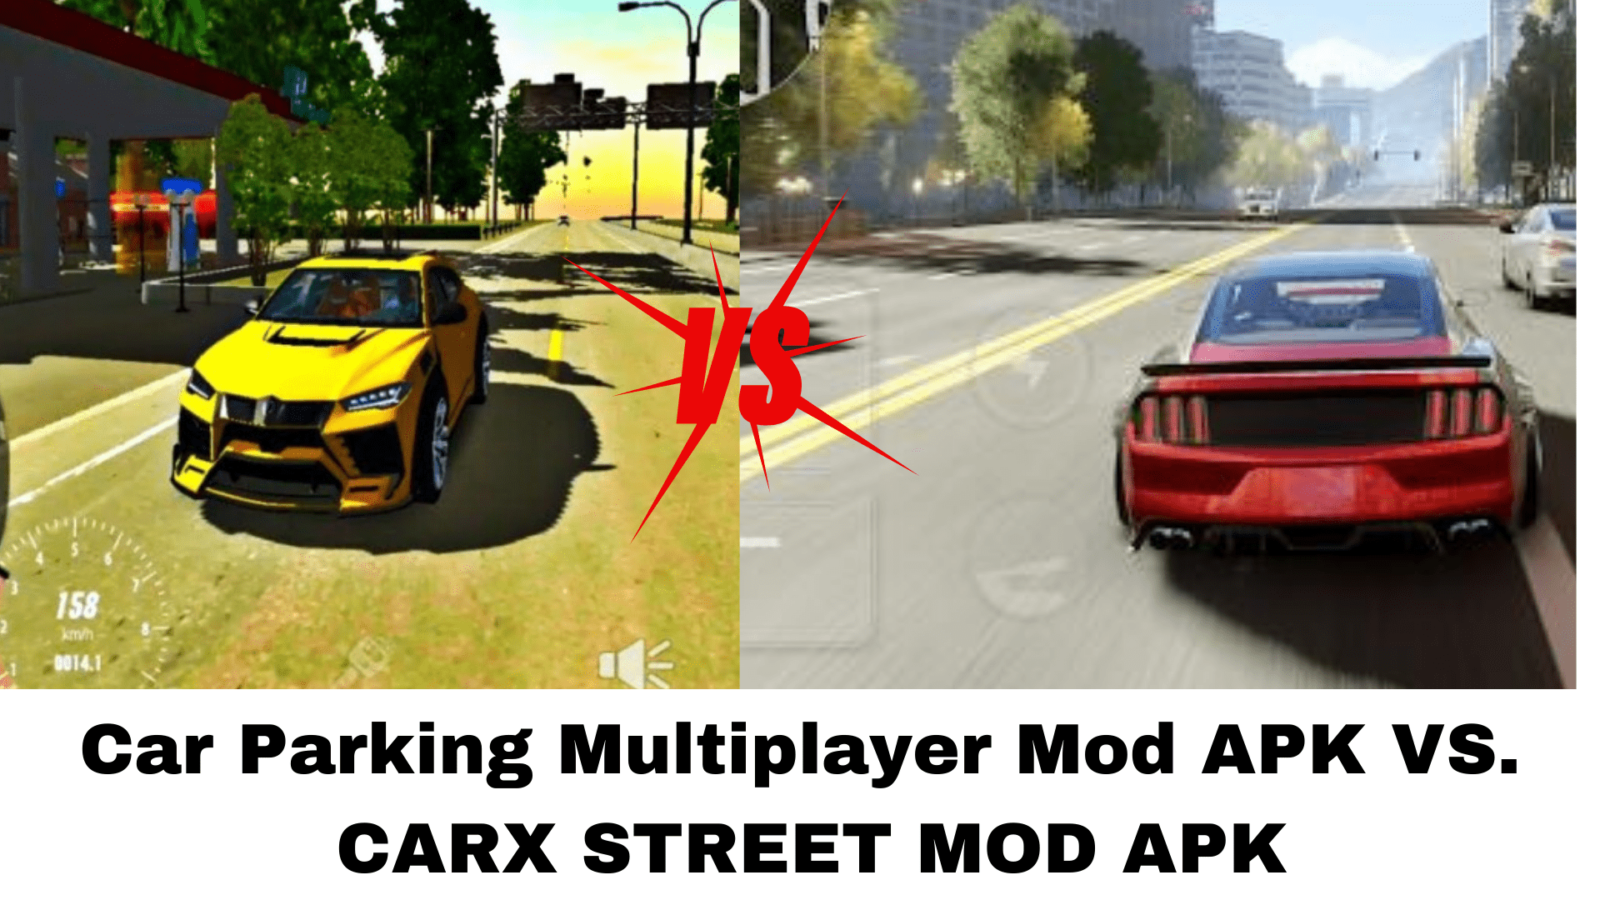 Car Parking Multiplayer Mod APK VS. CARX STREET MOD APK